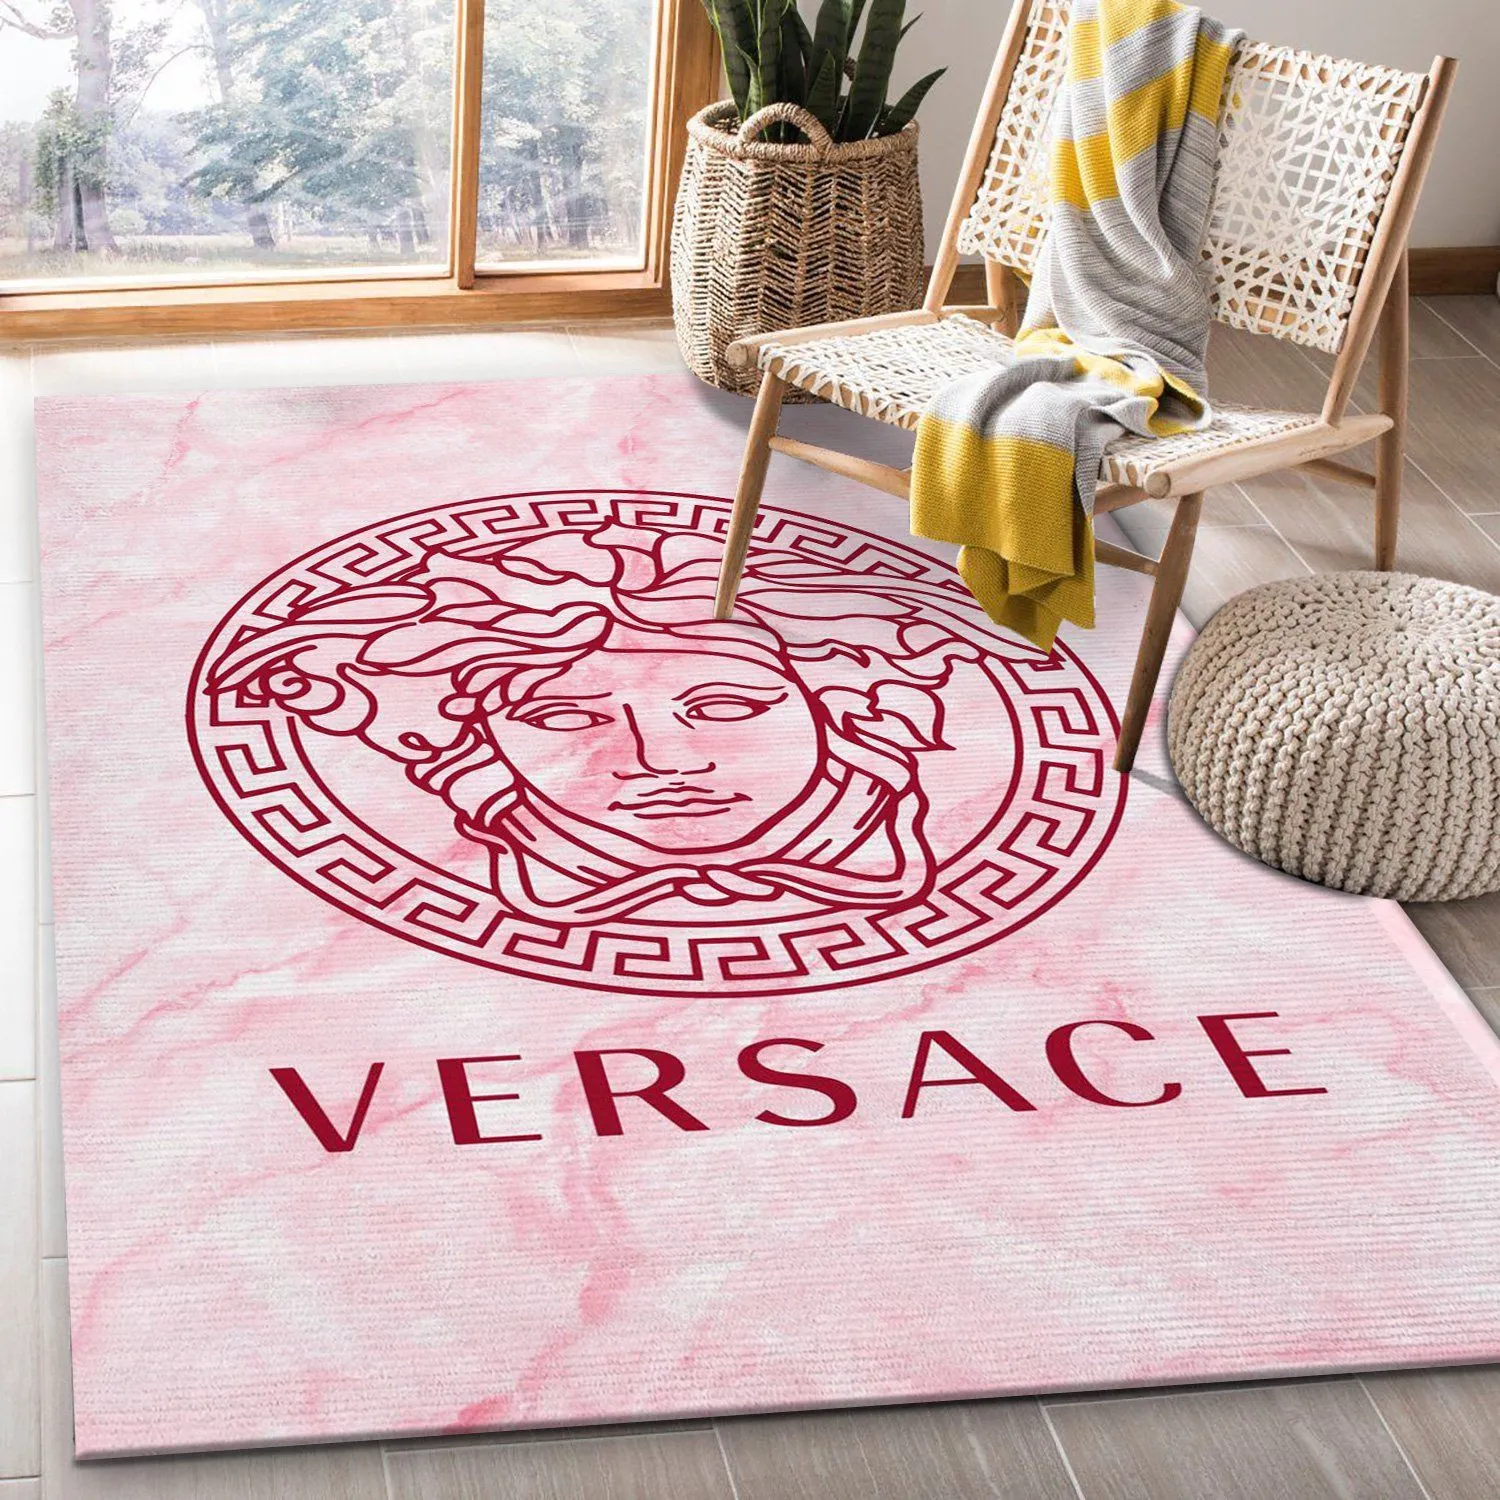 Versace Rectangle Rug Home Decor Area Carpet Luxury Fashion Brand Door Mat